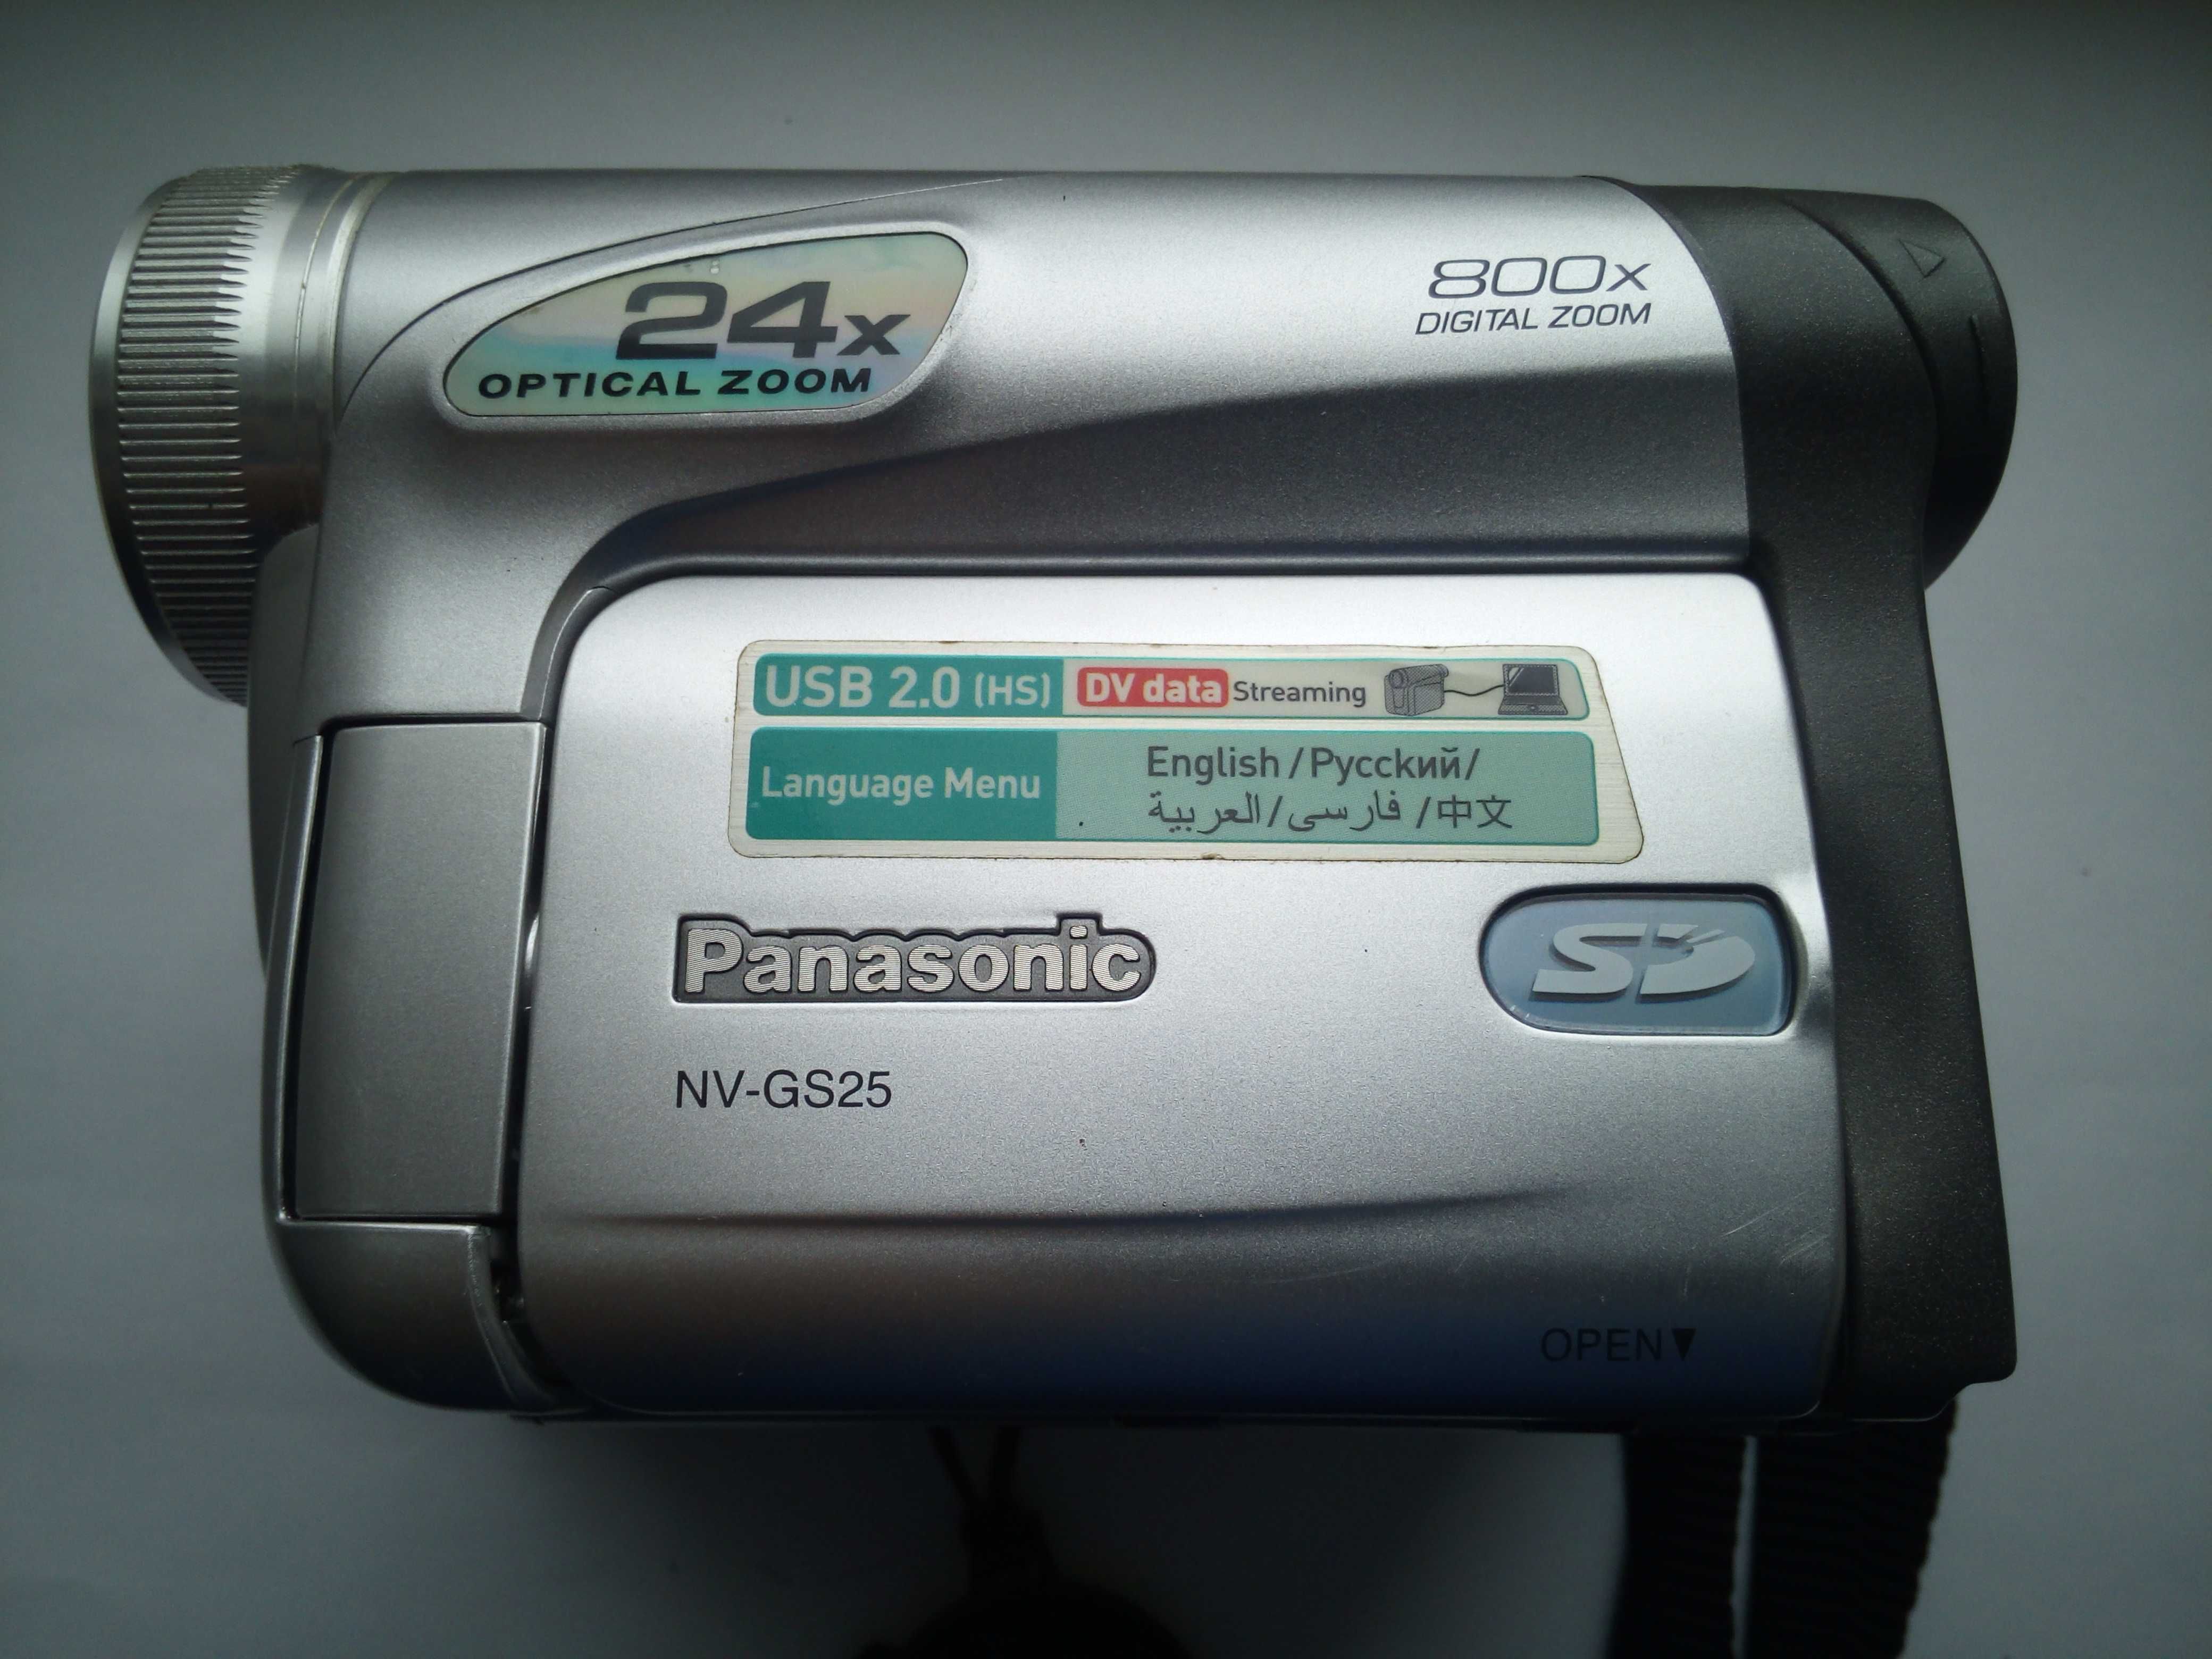 Відеокамера б/у "Panasonic NV-GS25". Made in Japan.